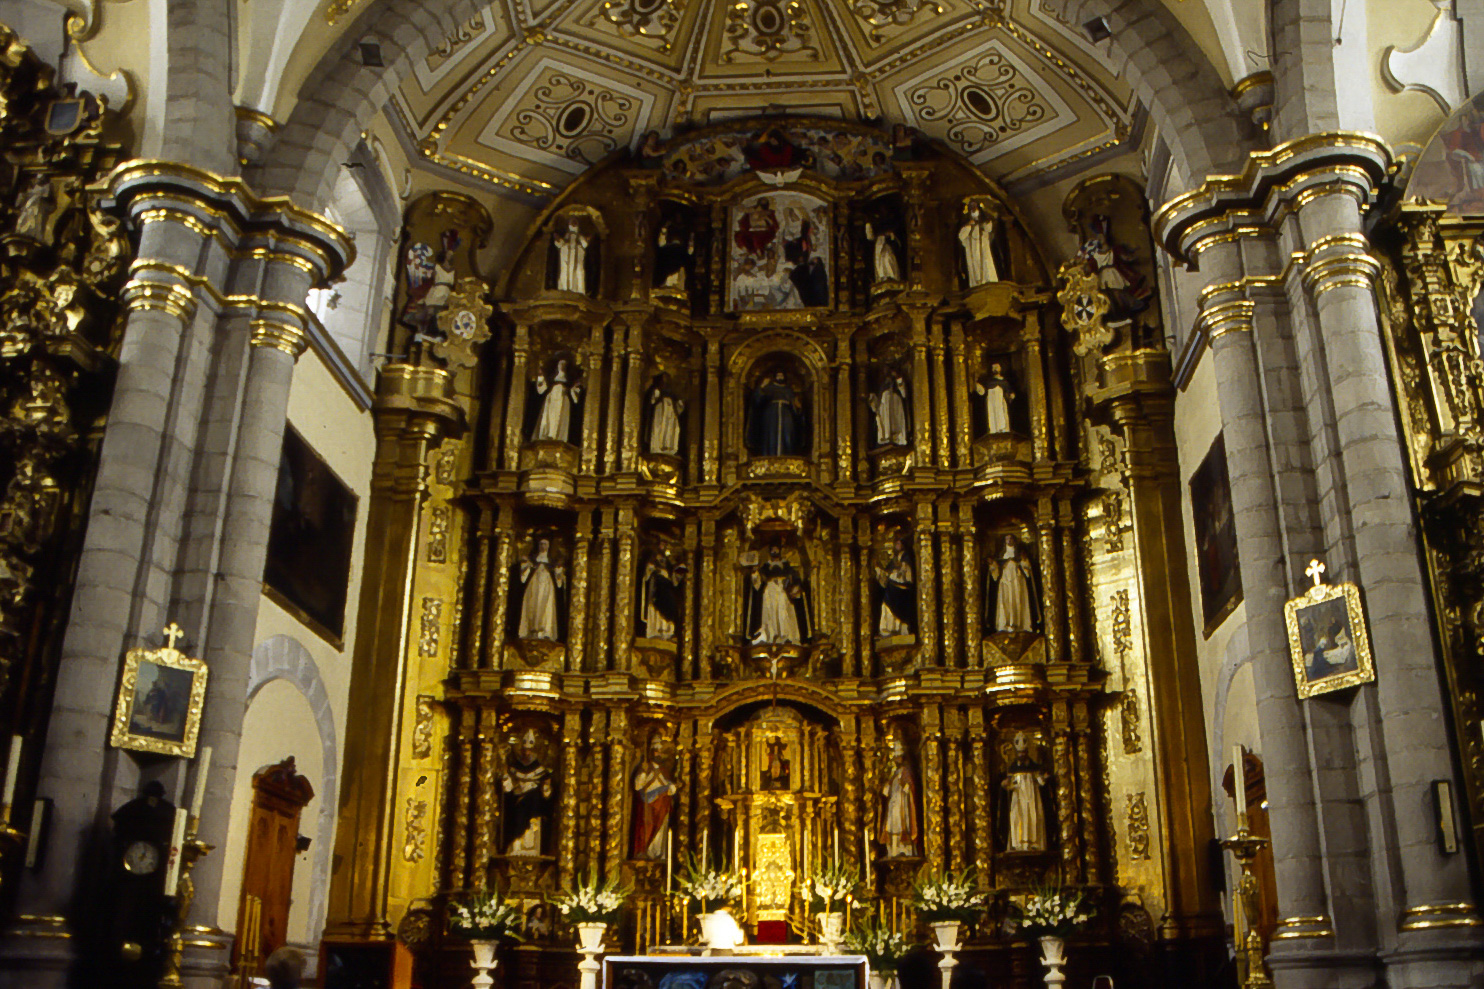 <span style="font-family: Verdana; font-size: 16px; color: ">Kathedraal van Puebla</span>